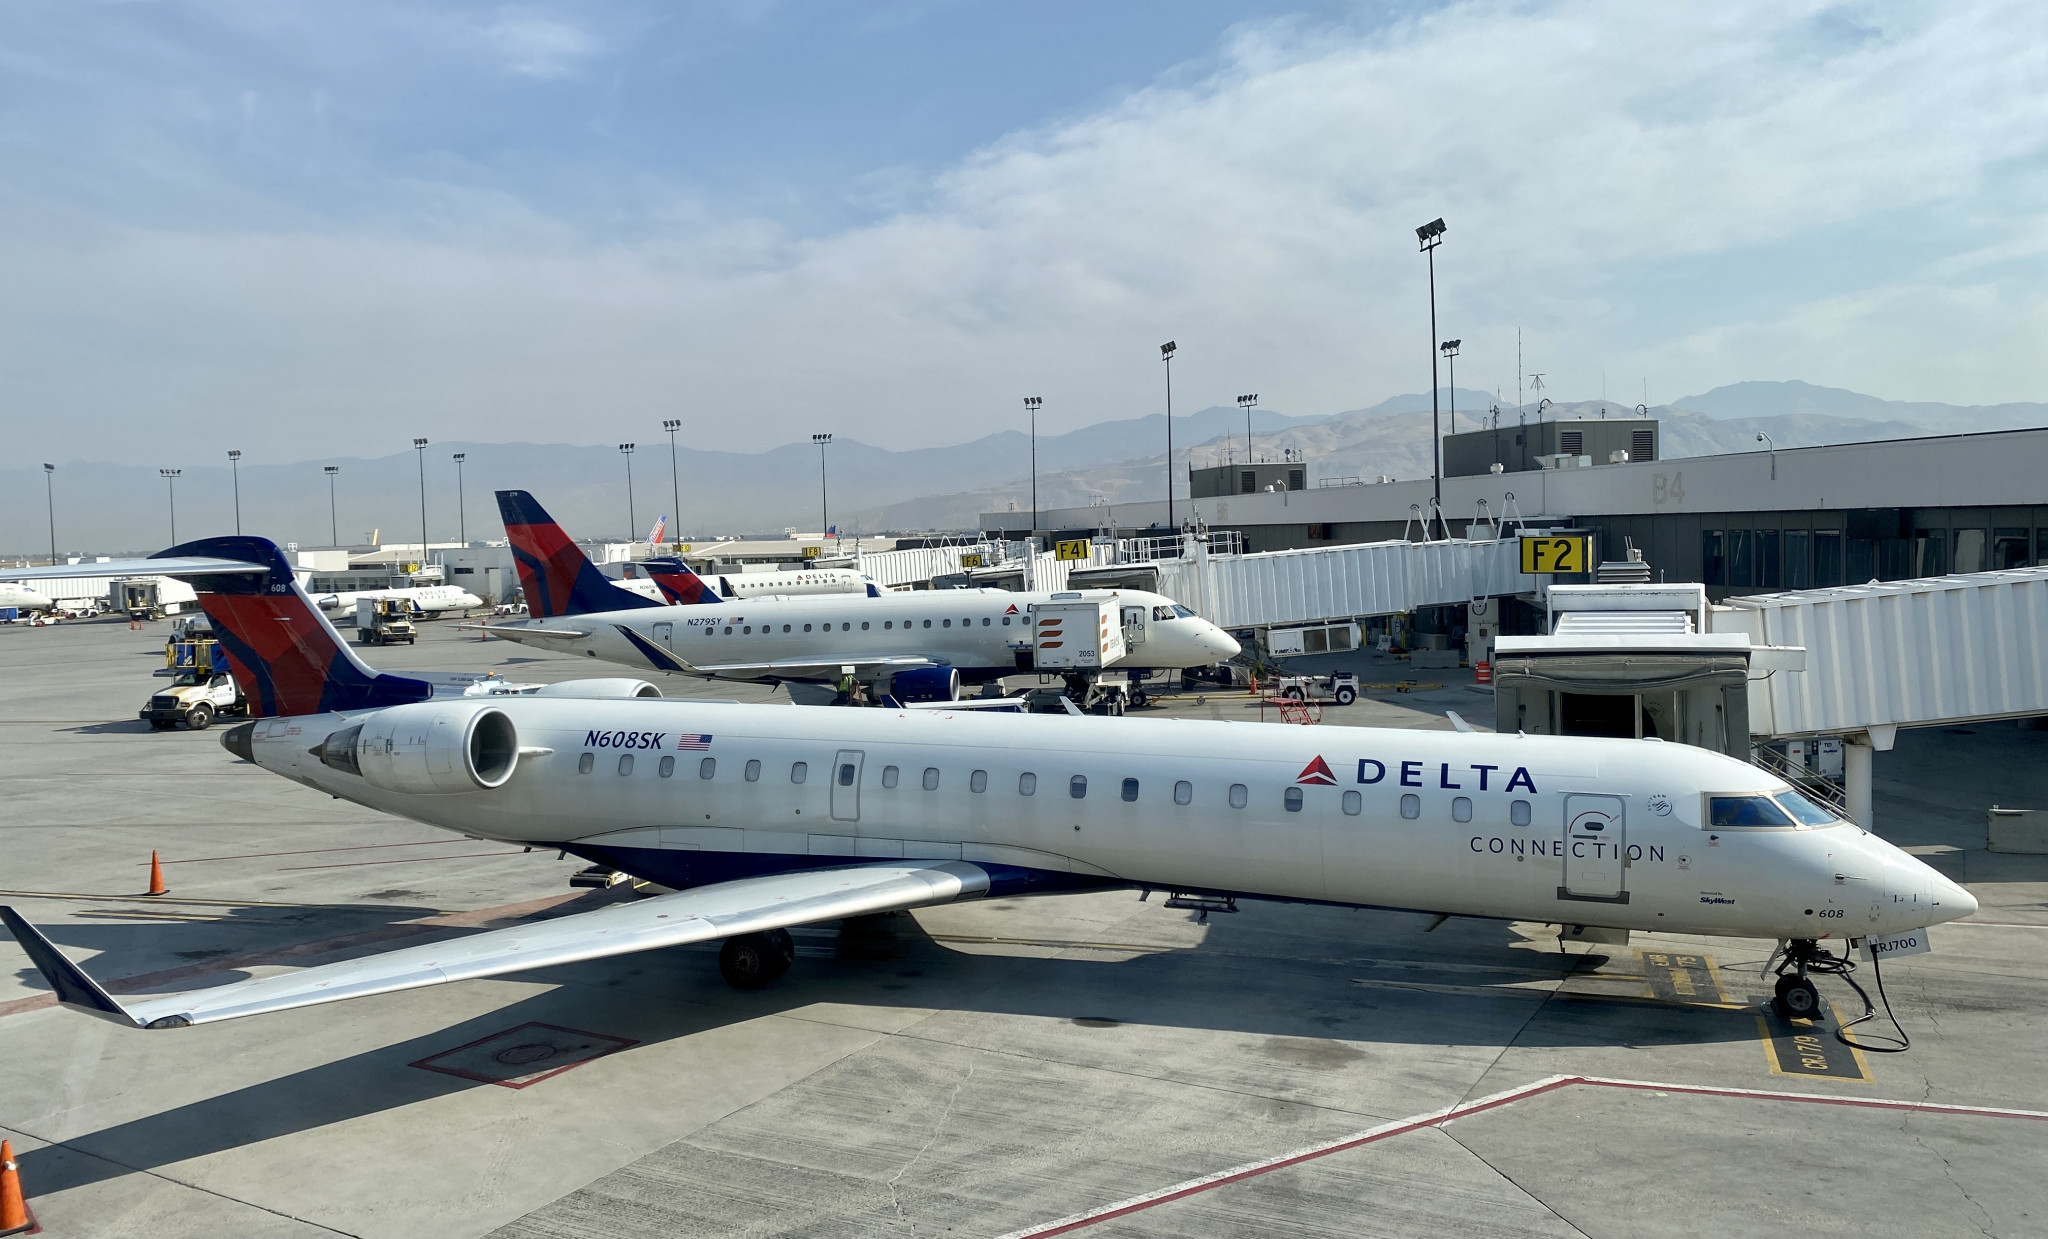 Nine-month losses soar to $14.5 billion at Los Angeles 2028 sponsor Delta Air Lines